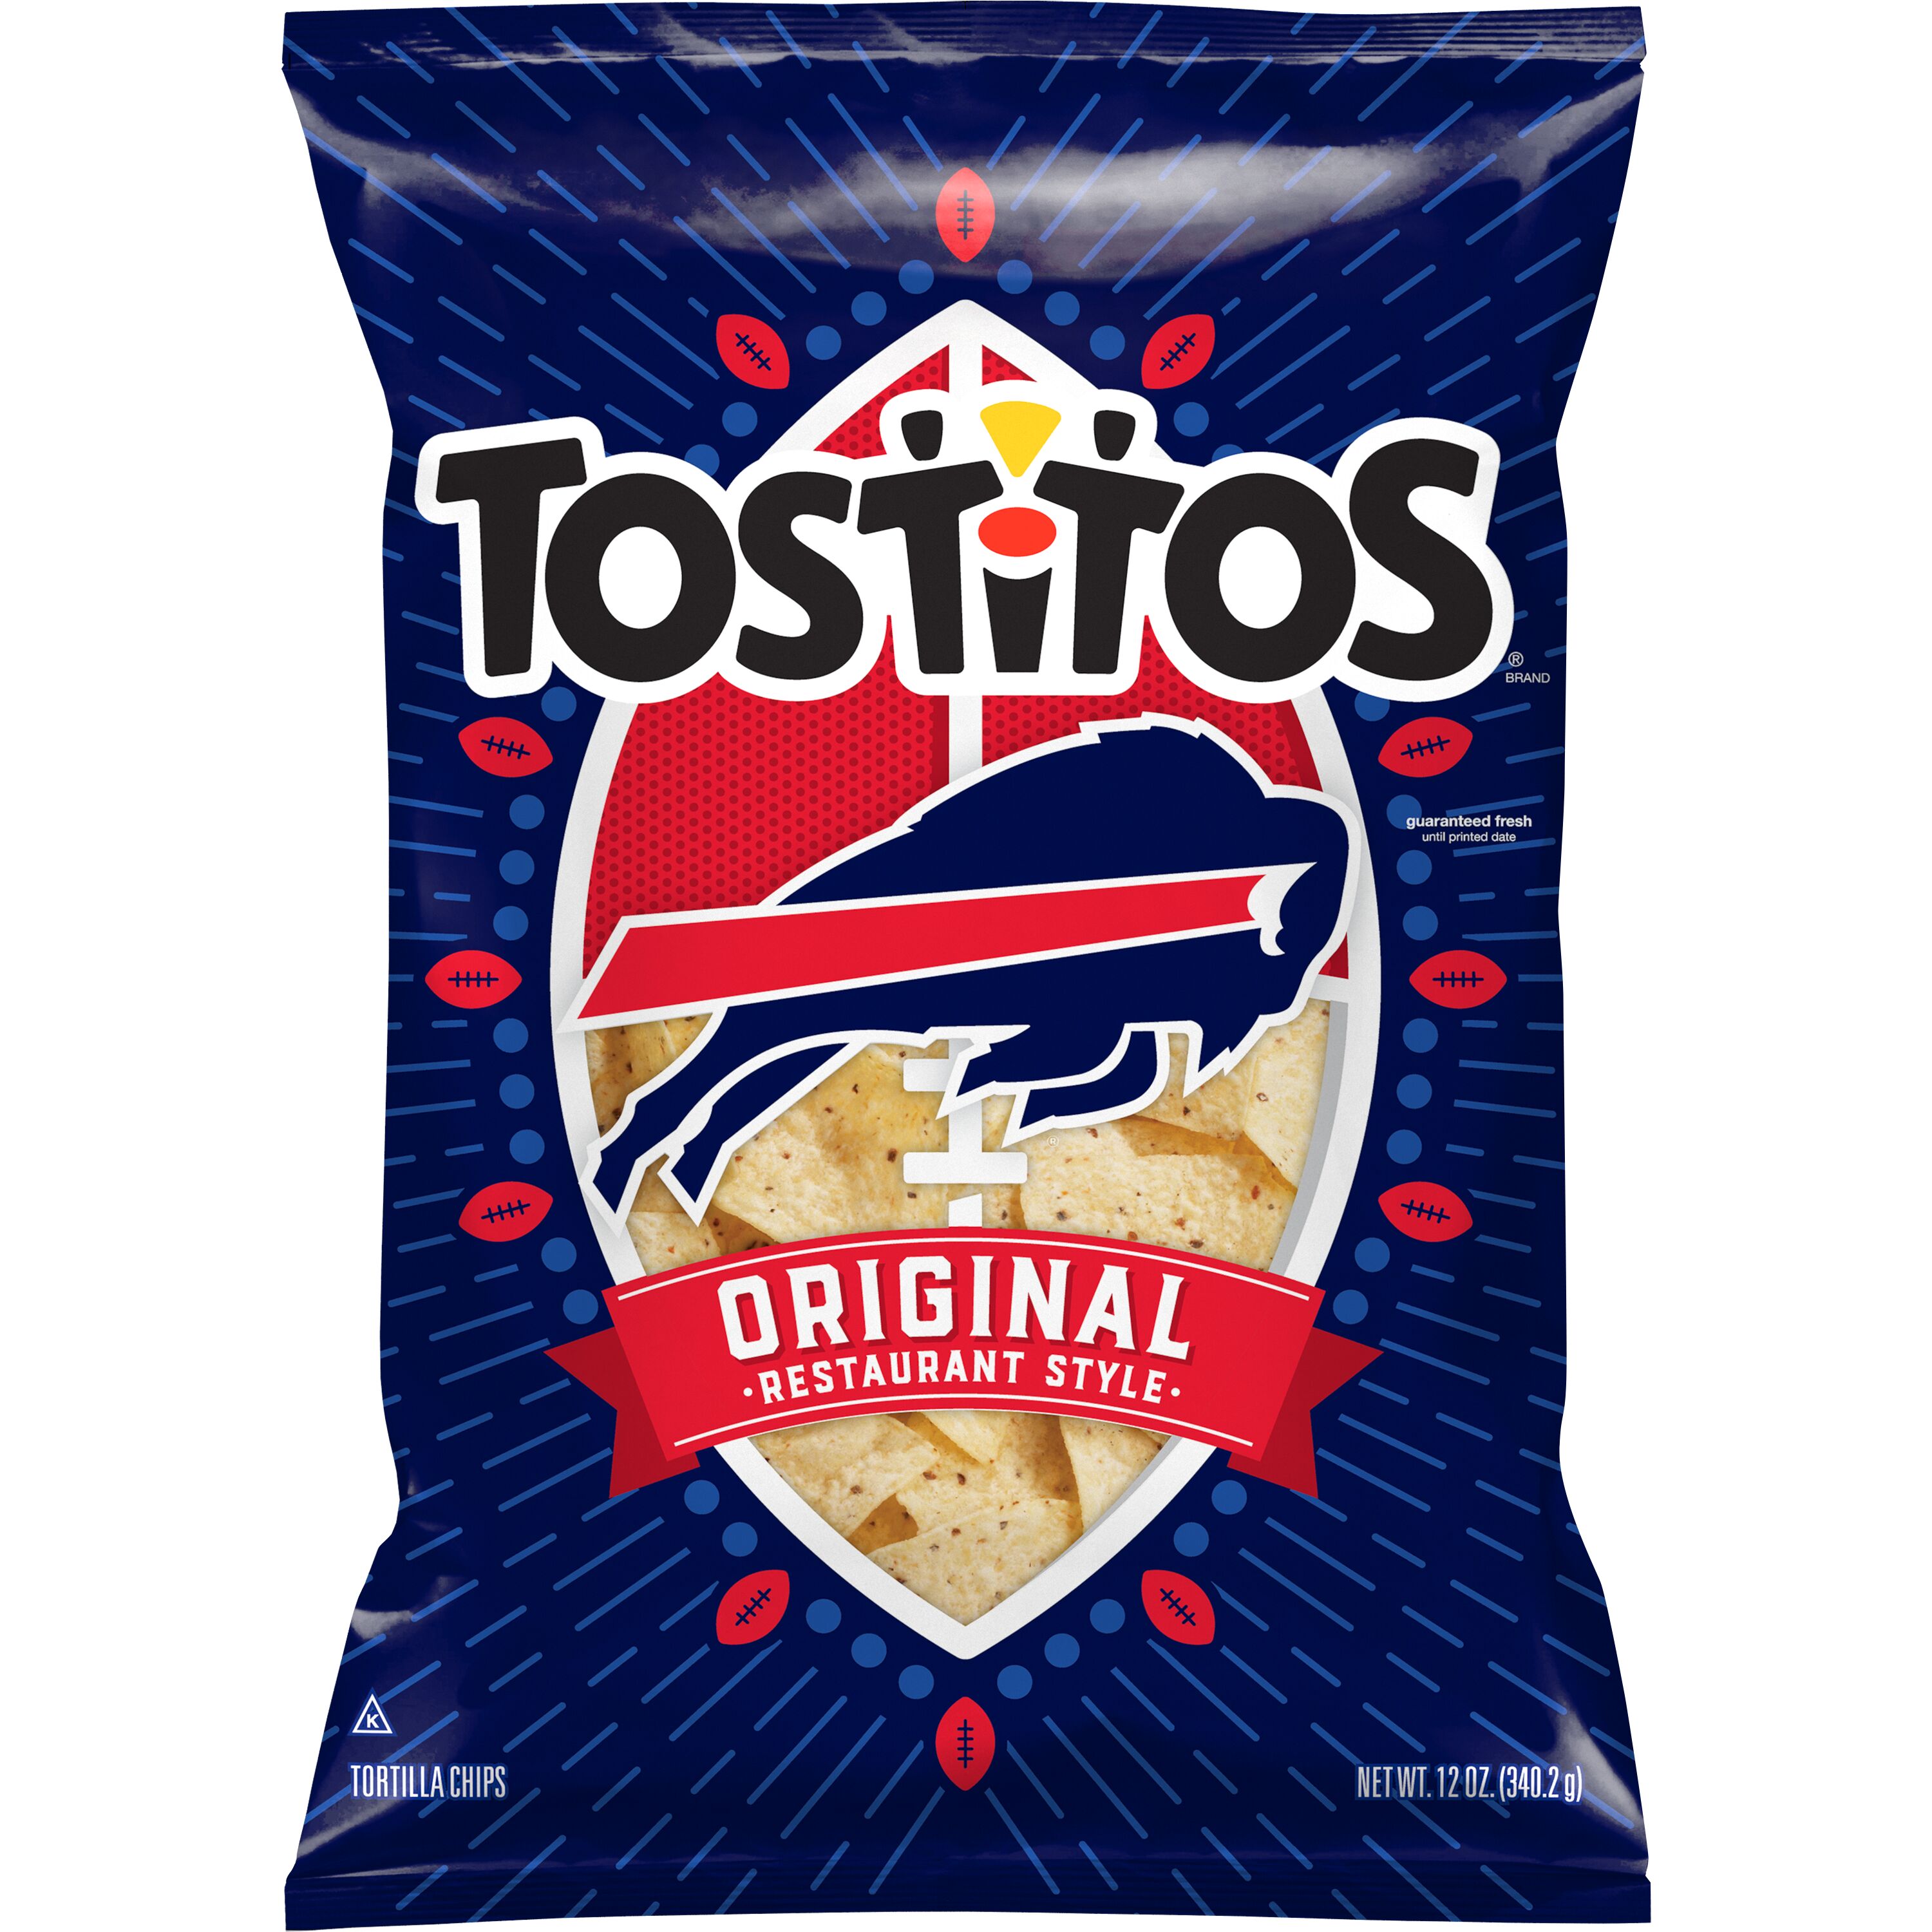 Tostitos Original Restaurant Style Tortilla Chips Smartlabel™